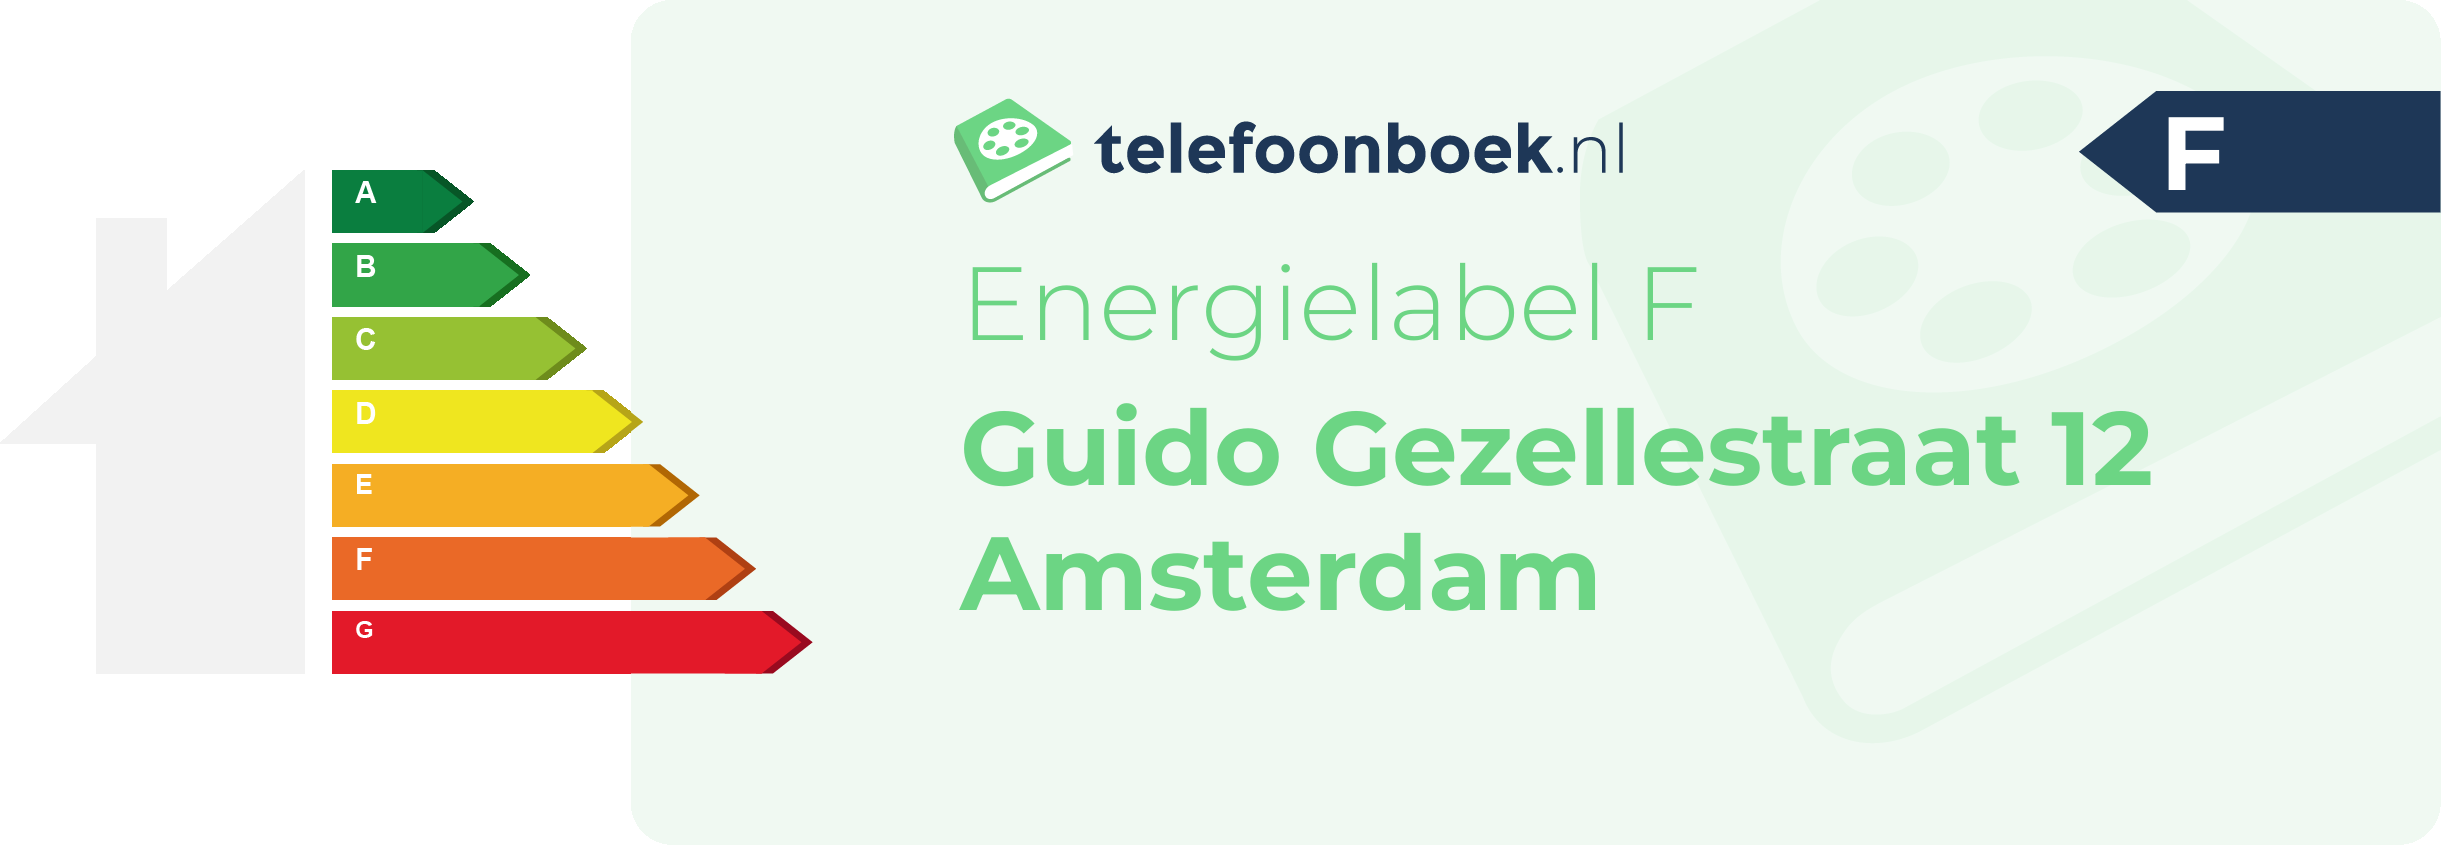 Energielabel Guido Gezellestraat 12 Amsterdam